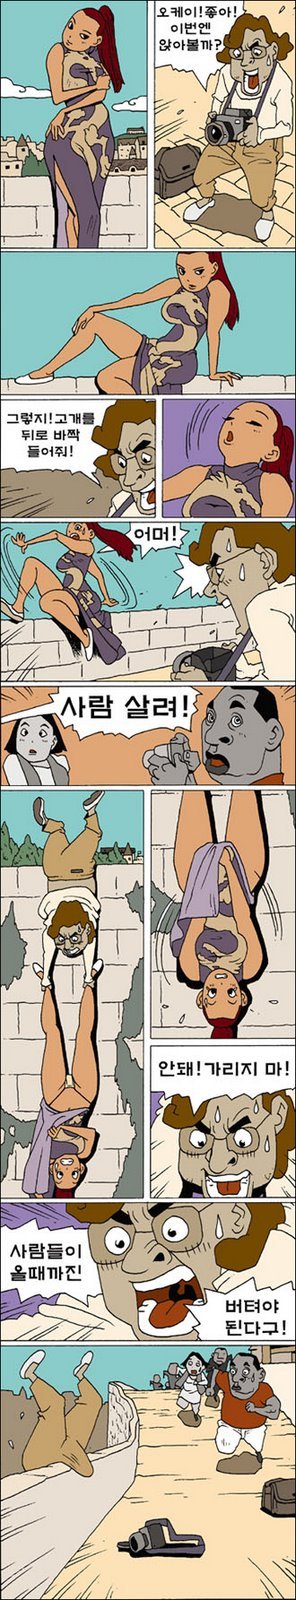 Korean Comics 1